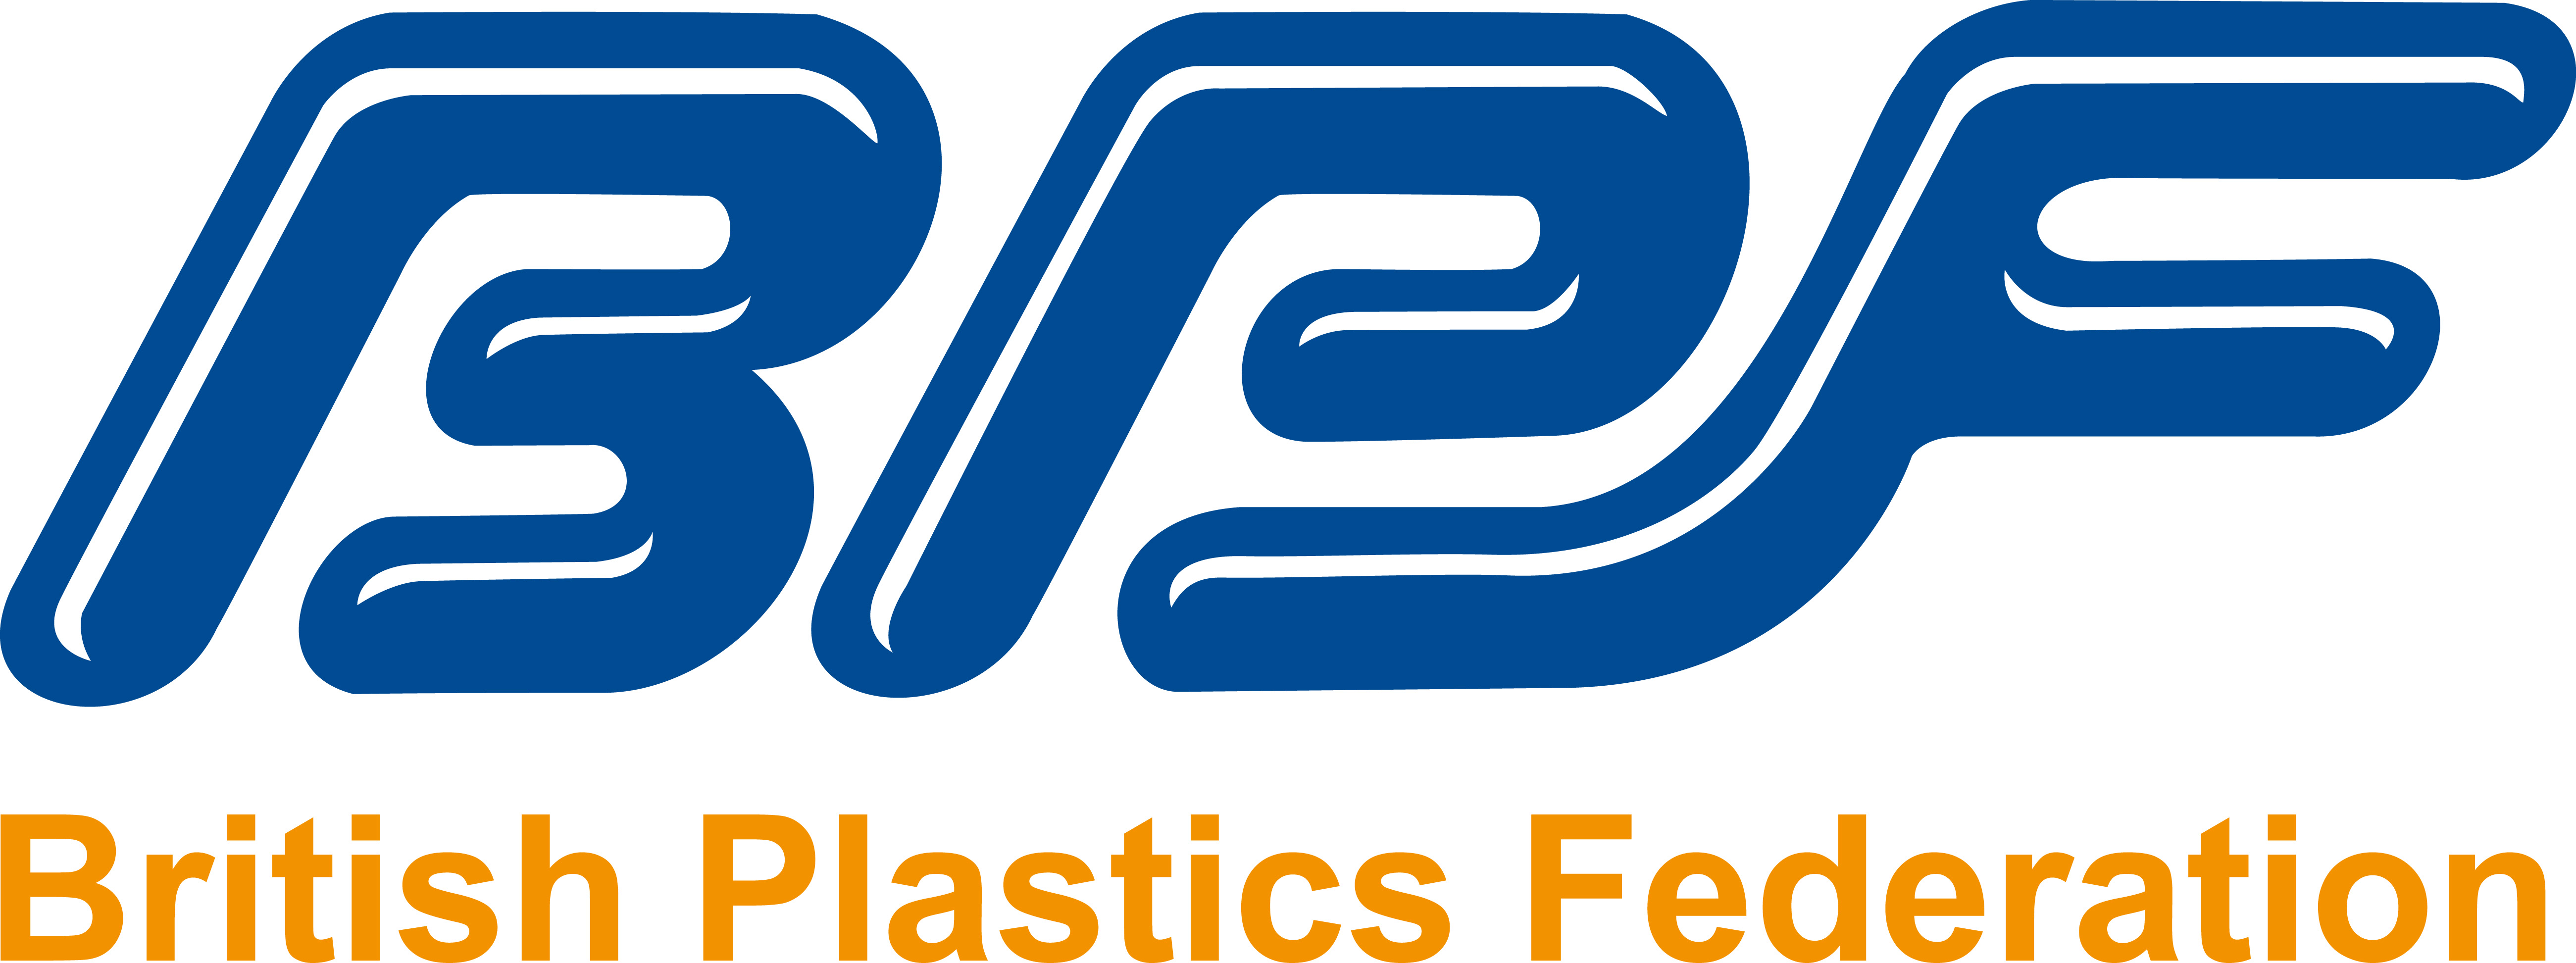 bpf-logo-large